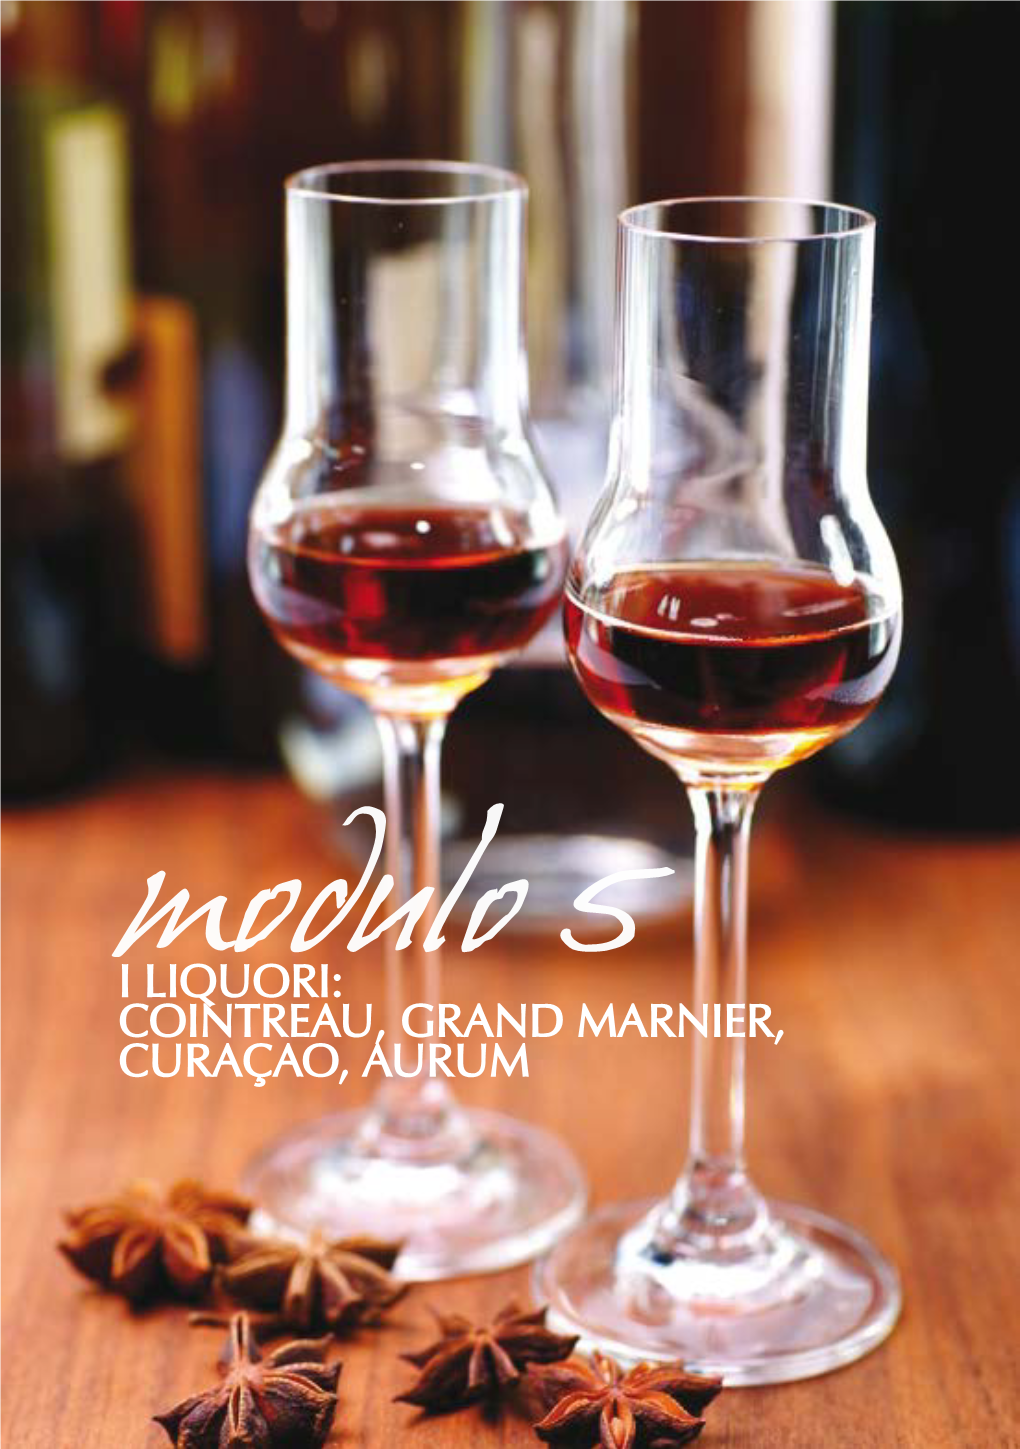 I Liquori: Cointreau, Grand Marnier, Curaçao, Aurum